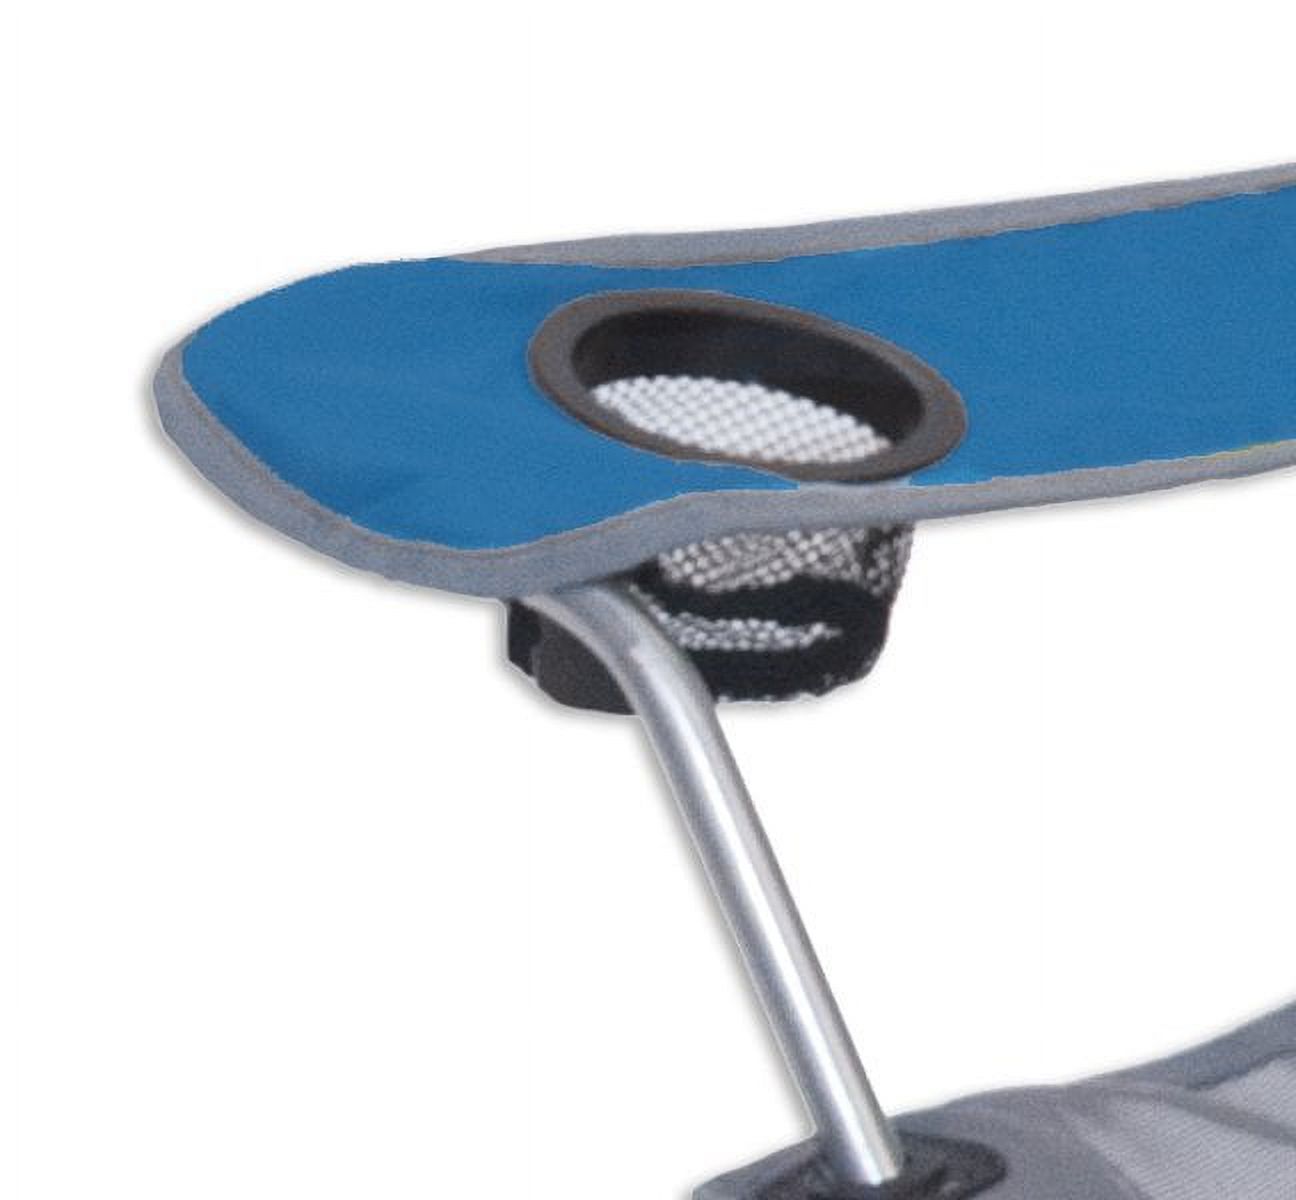 2) Kelsyus Mesh Folding Backpack Beach Chair w/ Headrest - Blue & Gray | 80403 - image 5 of 5